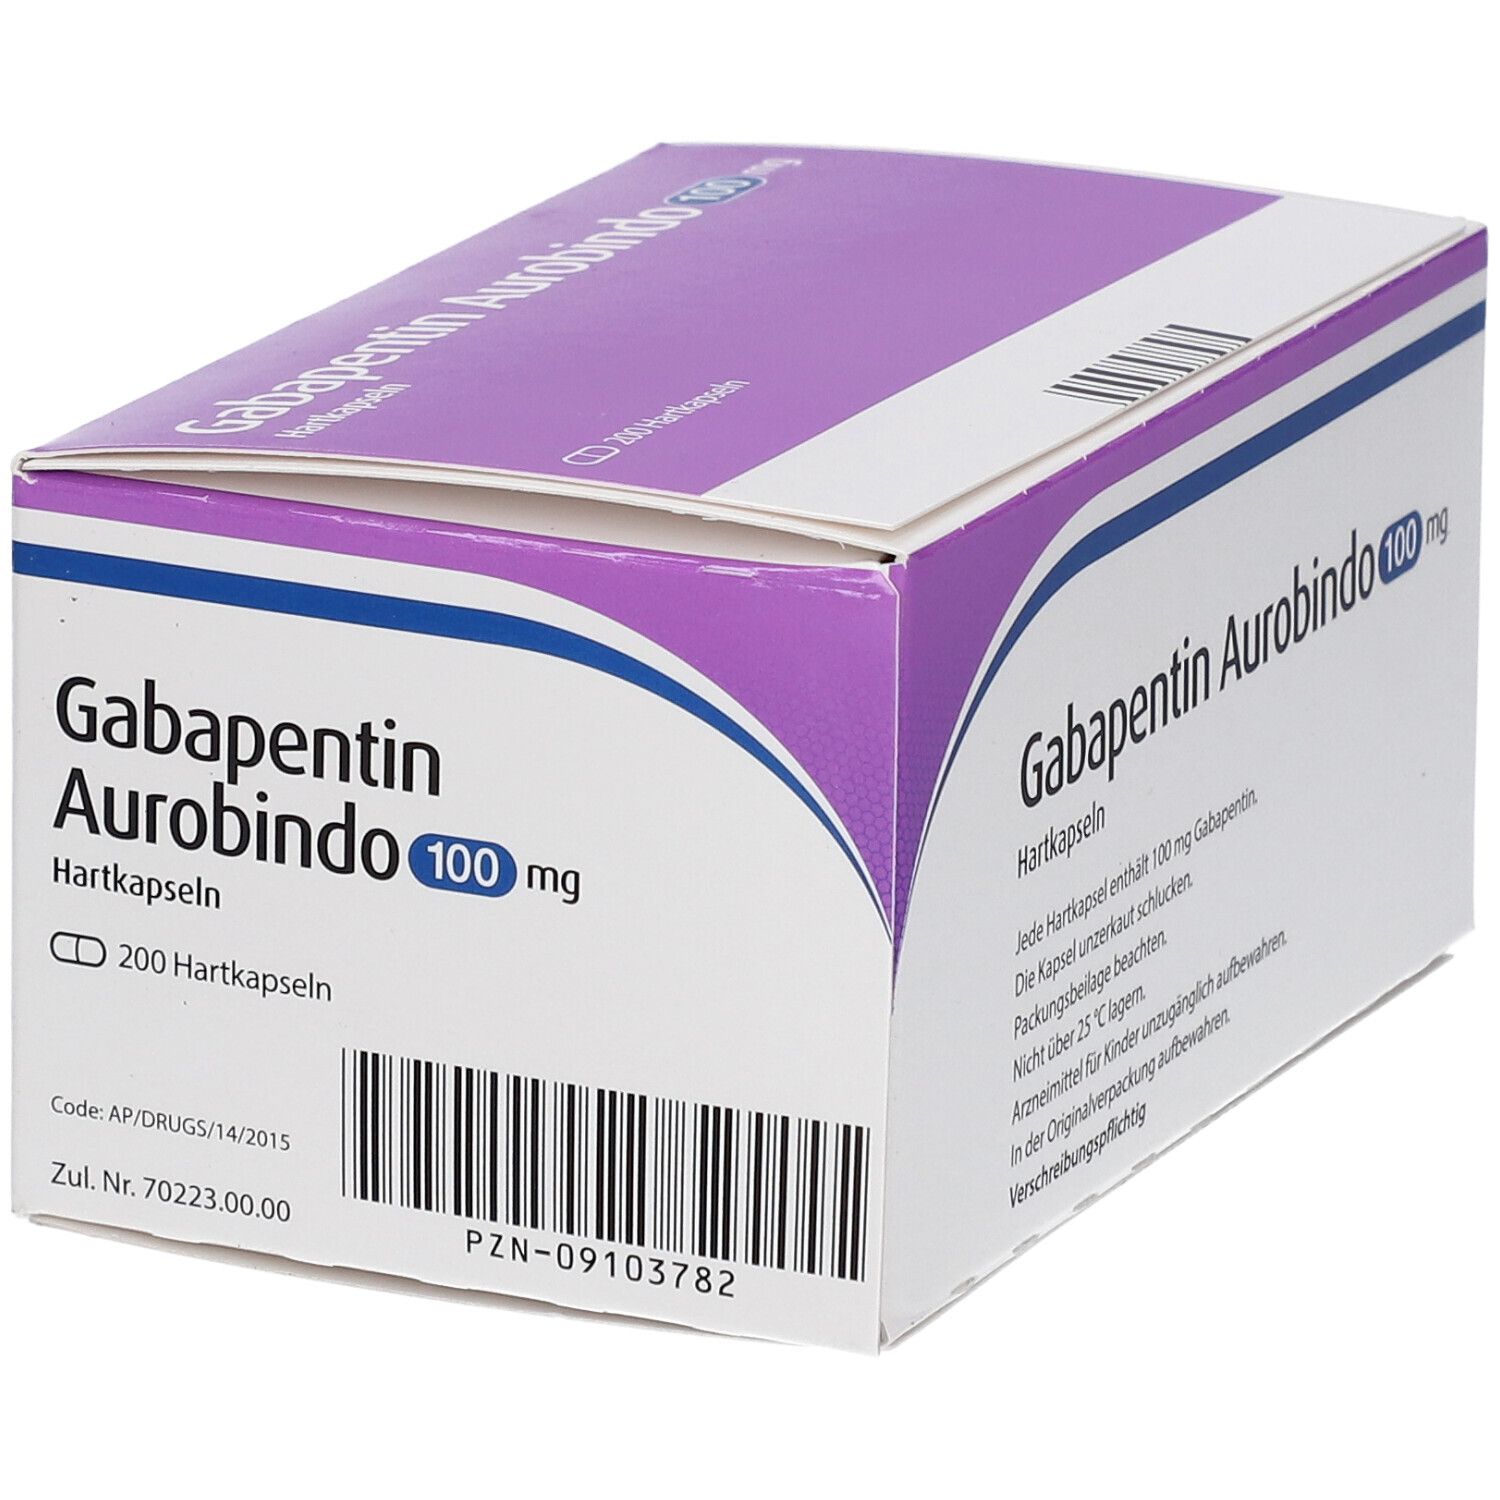 Gabapentin Aurobindo 100 mg